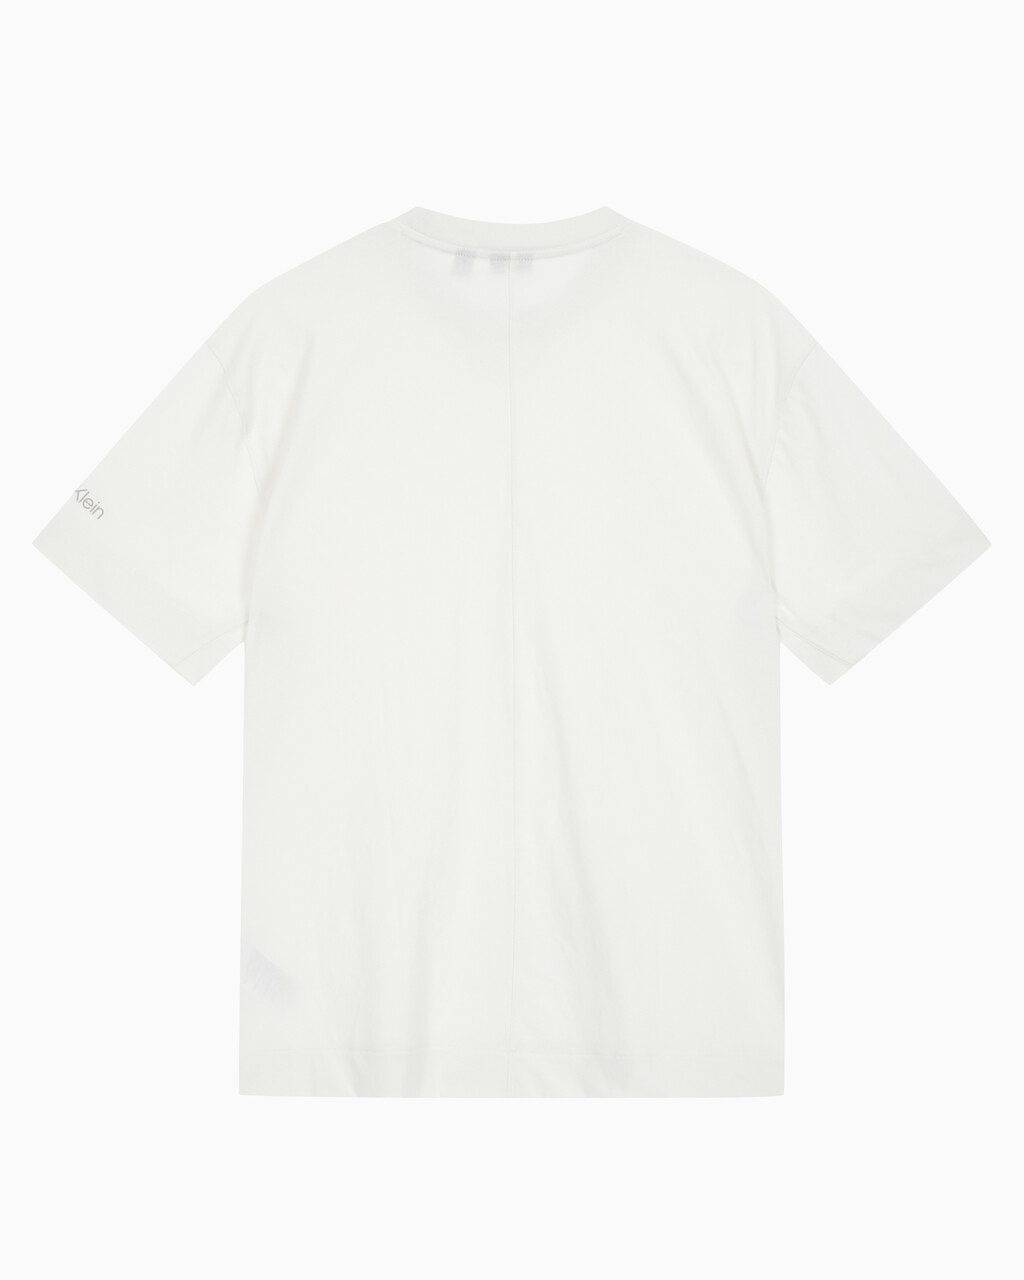 Buy 남성 릴랙스핏 에슬레틱 숏슬리브 티셔츠 in color WHITE